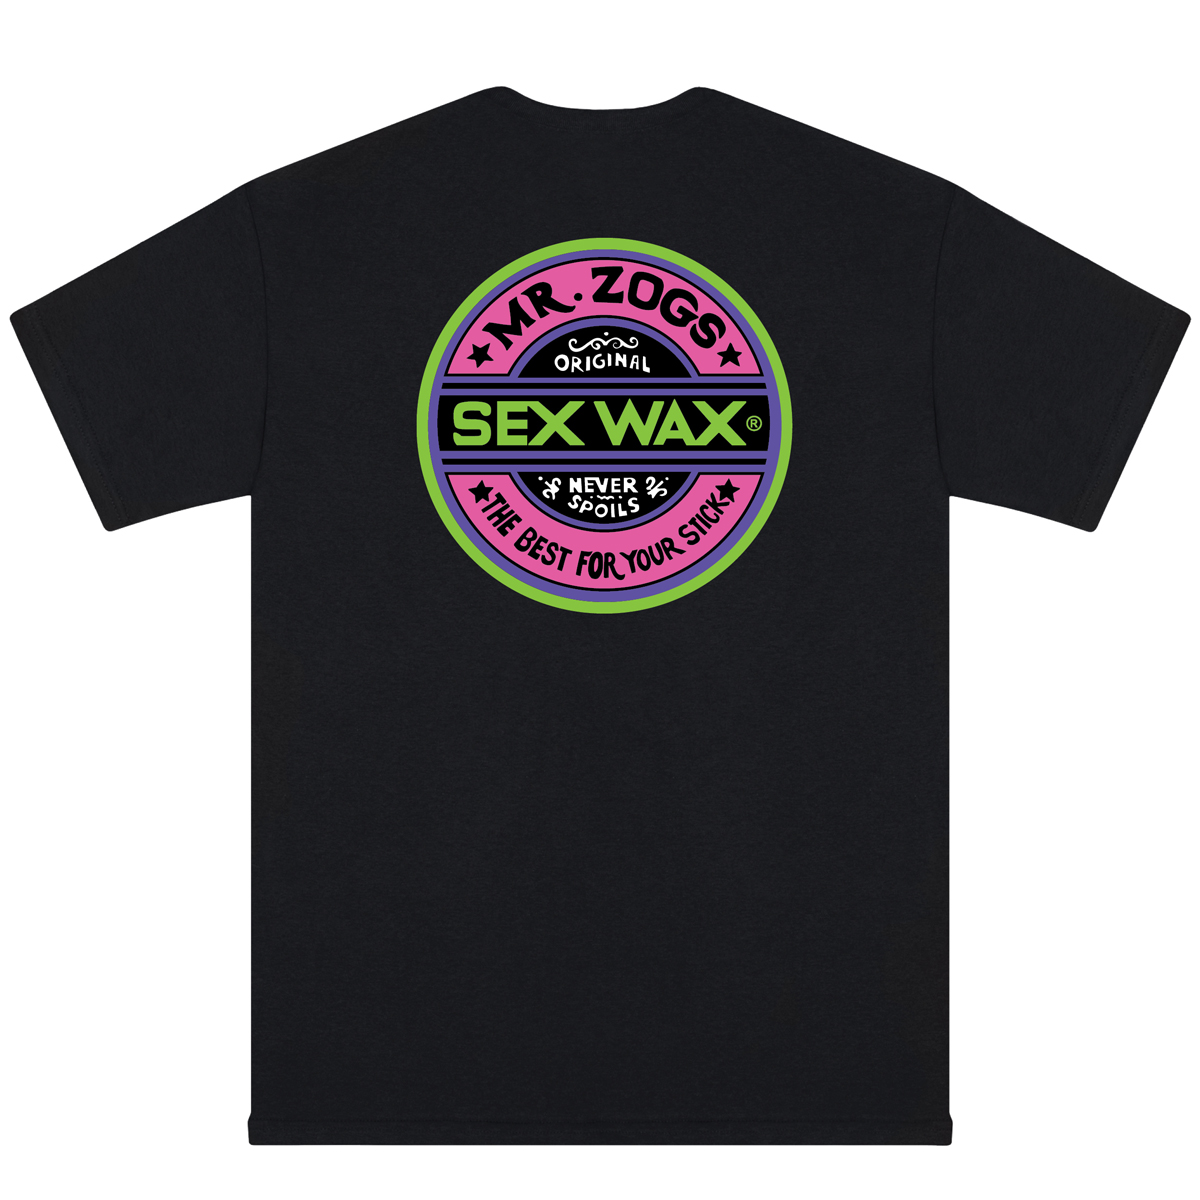 Mr. Zogs Sex Wax Tee